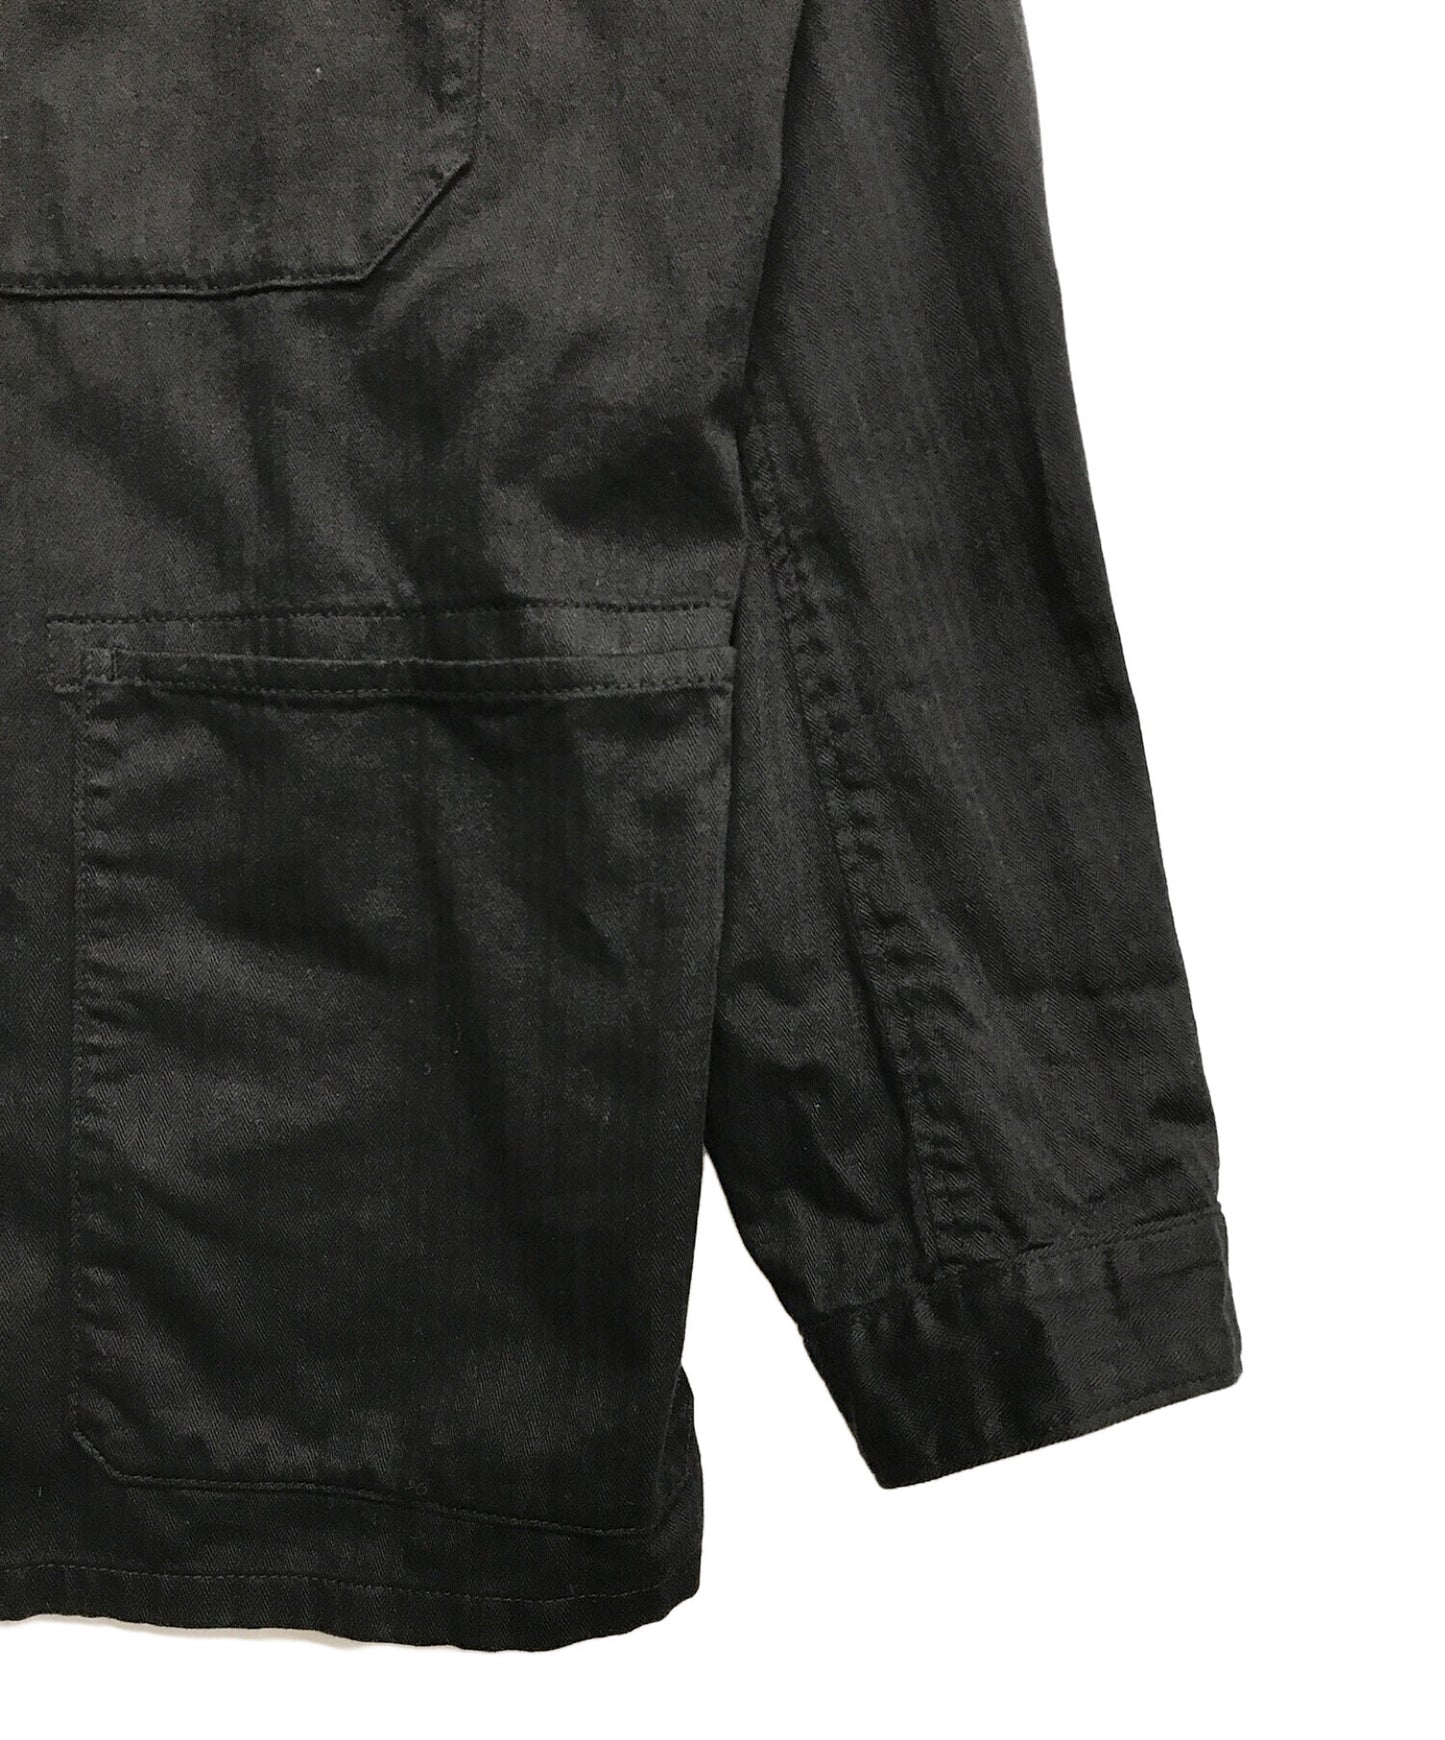 [Pre-owned] Yohji Yamamoto pour homme Staff Print Work Shirt Jacket Jacket HK-Y99-004